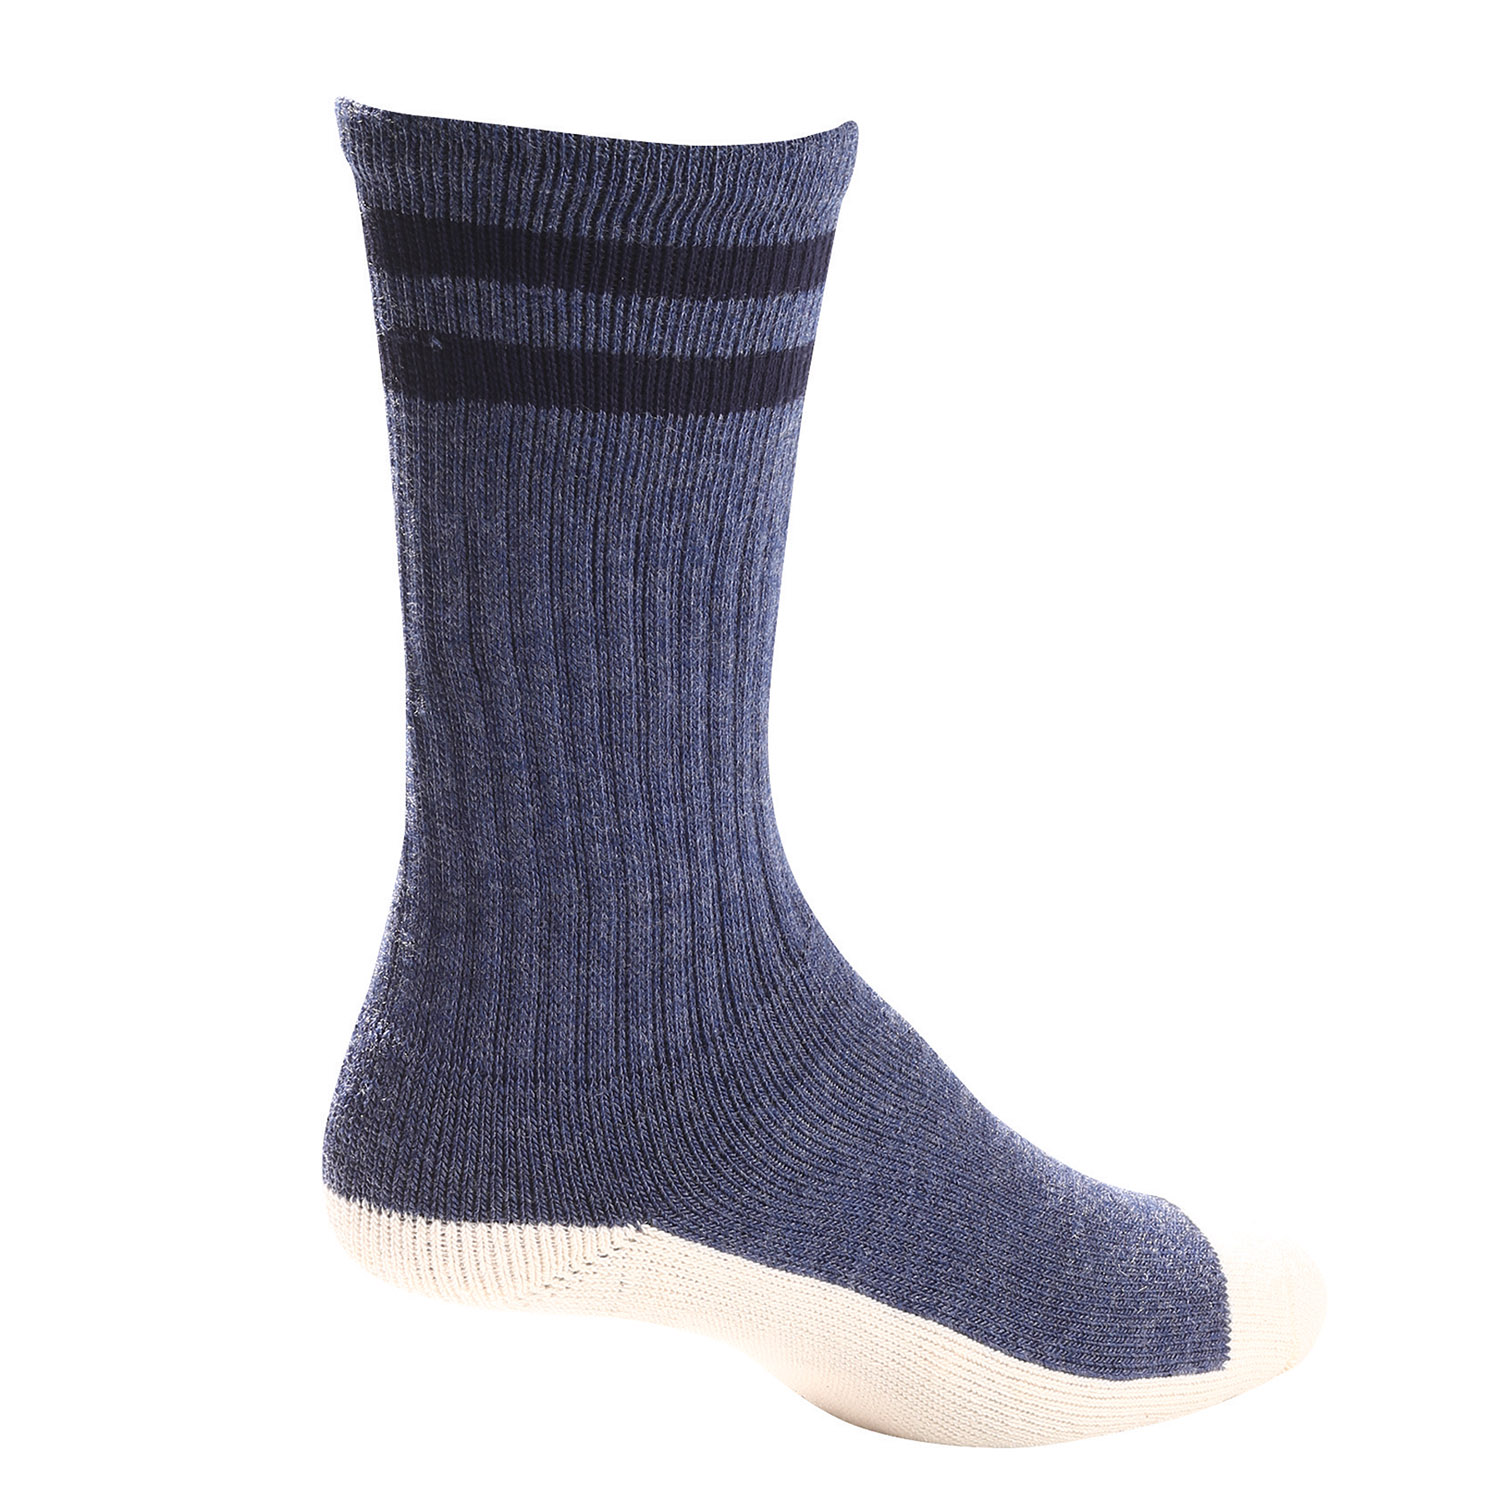 Pro Feet Postal Approved Cushioned Crew Health Socks (S218)